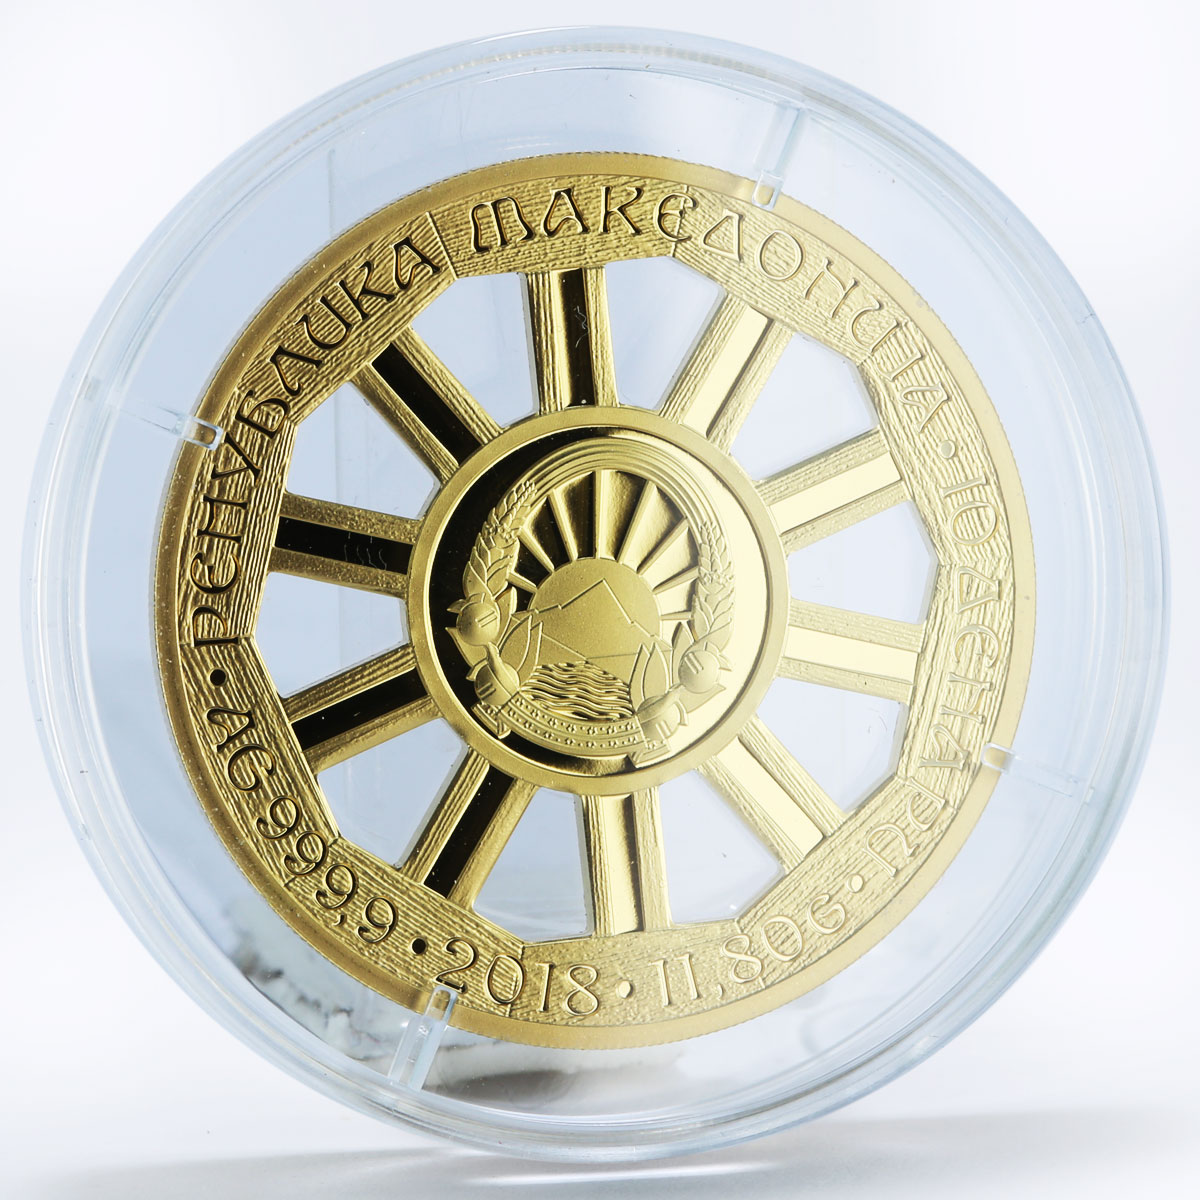 Macedonia 10 denars Wheel of Fortune gilded silver coin 2018